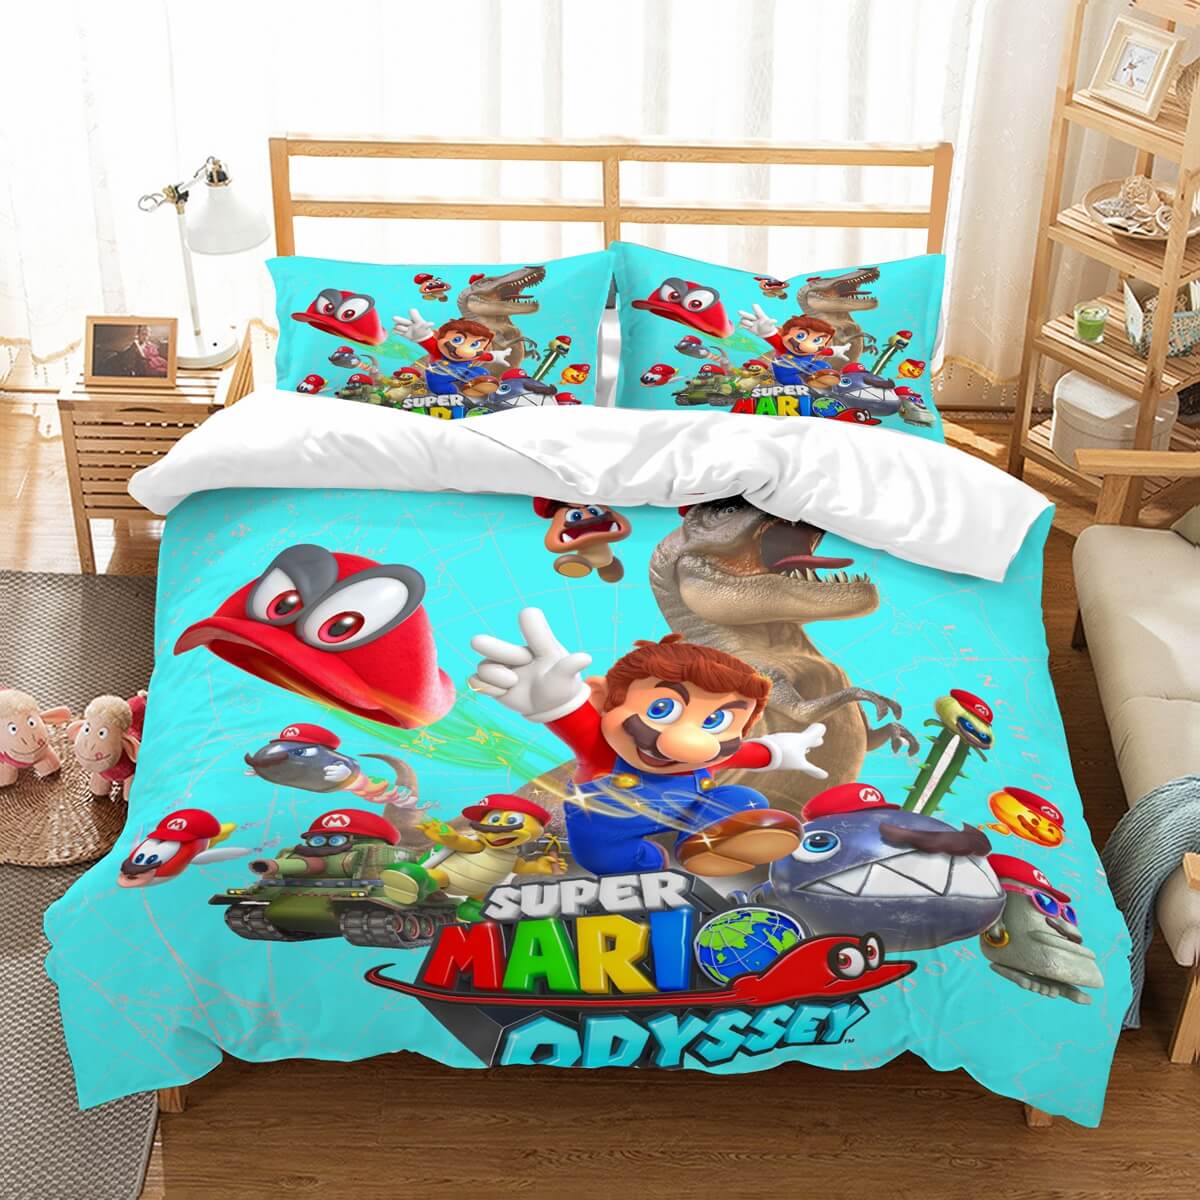 3d Customize Super Mario Odyssey Bedding Set Duvet Cover Set